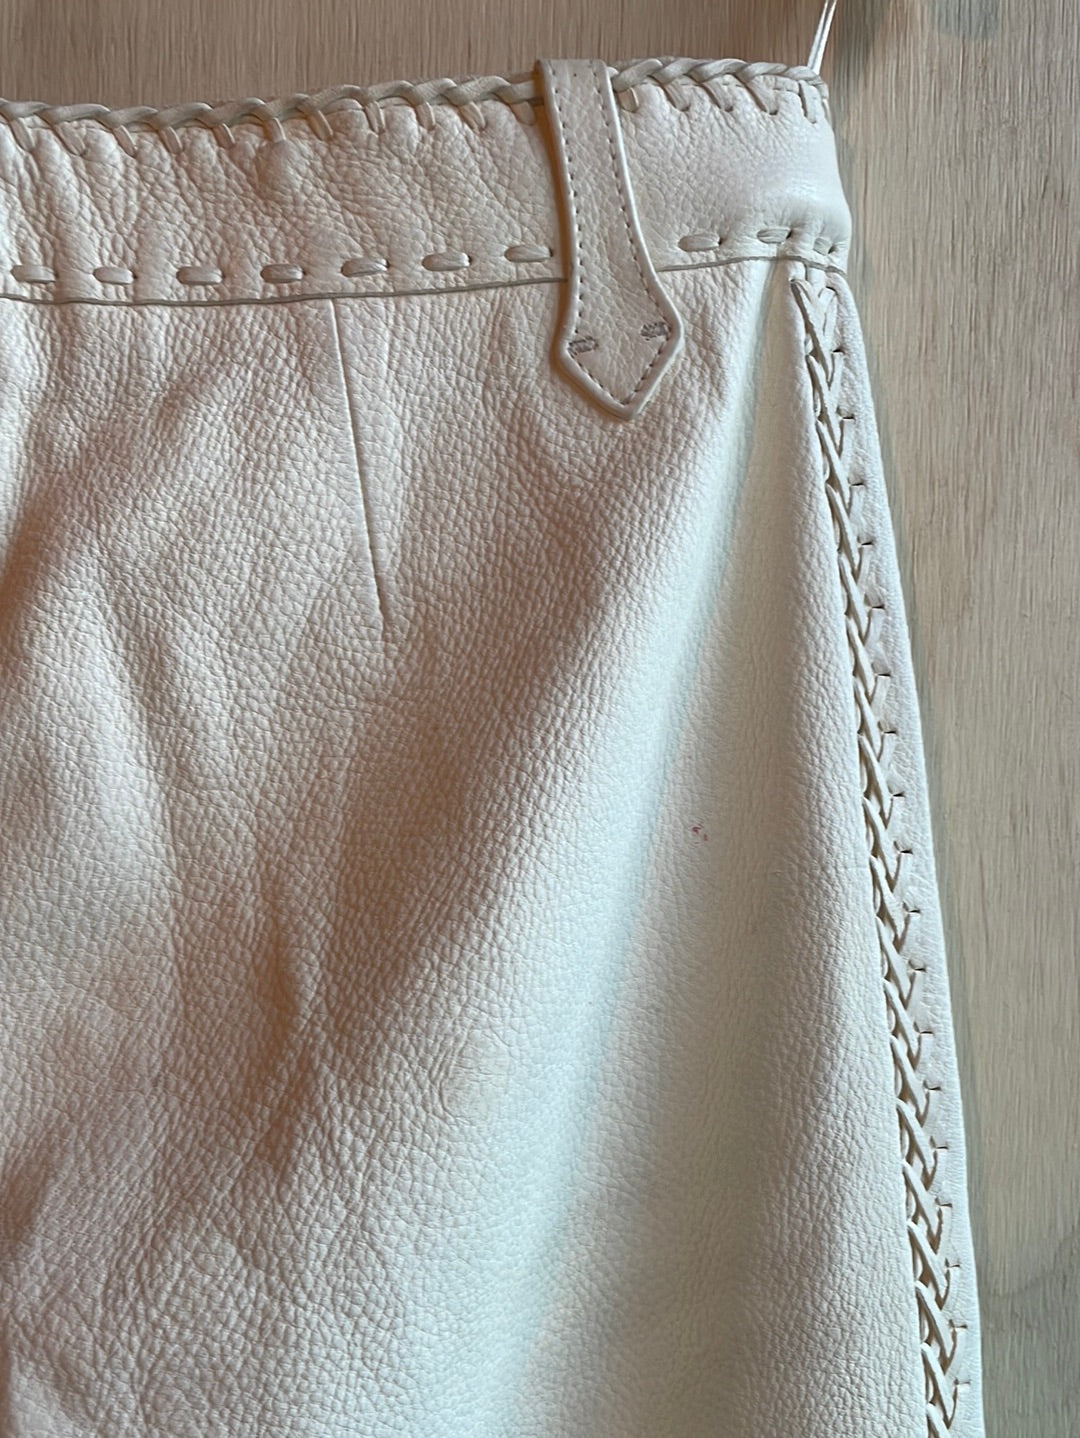 Ralph Lauren Leather Pants - Cream